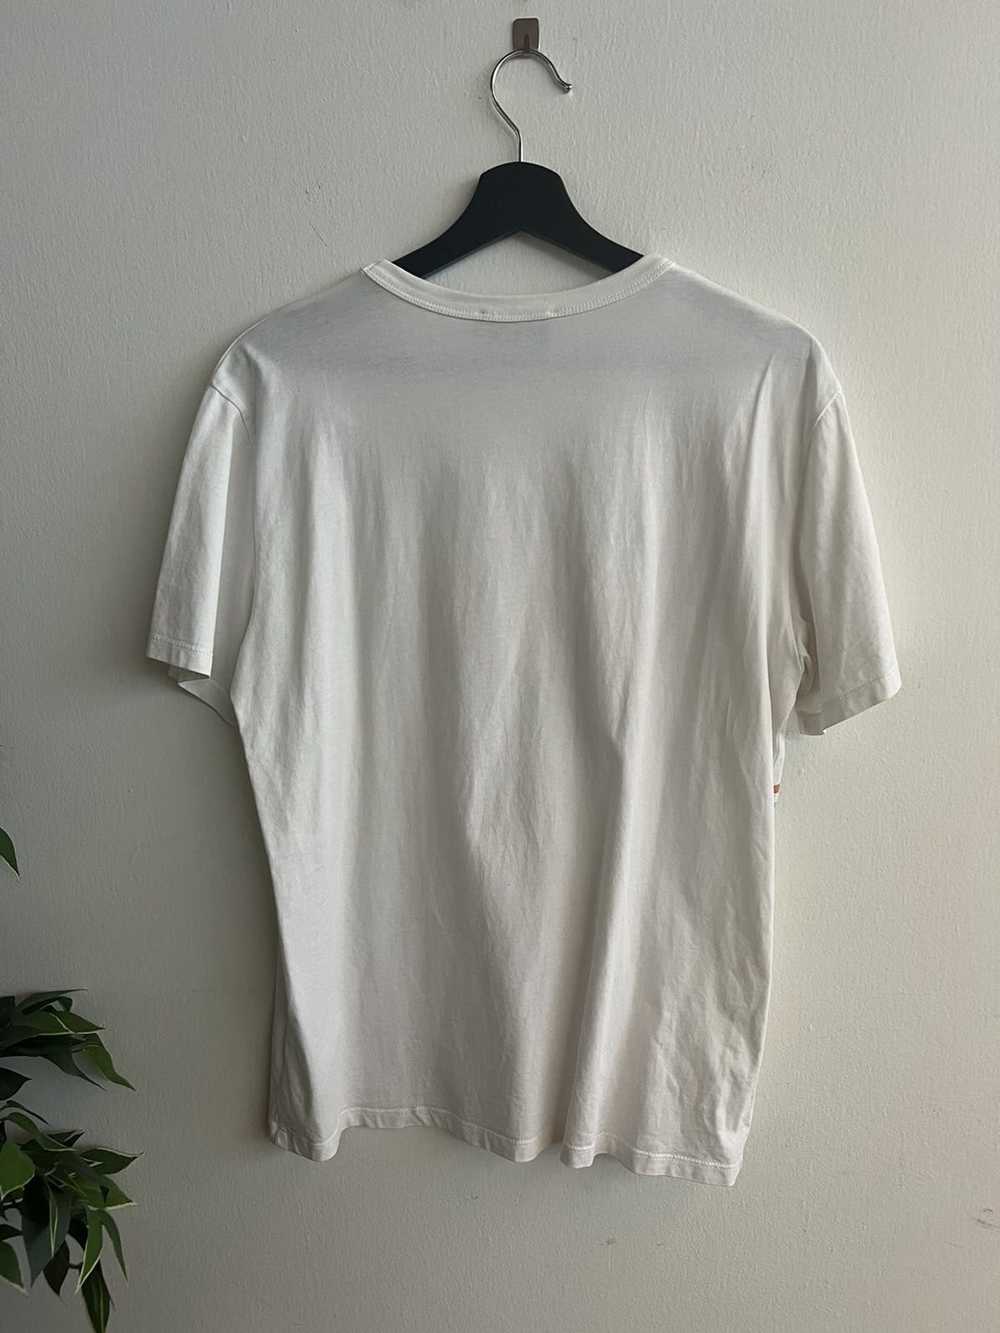 Maison Kitsune SS16 T shirt - image 4